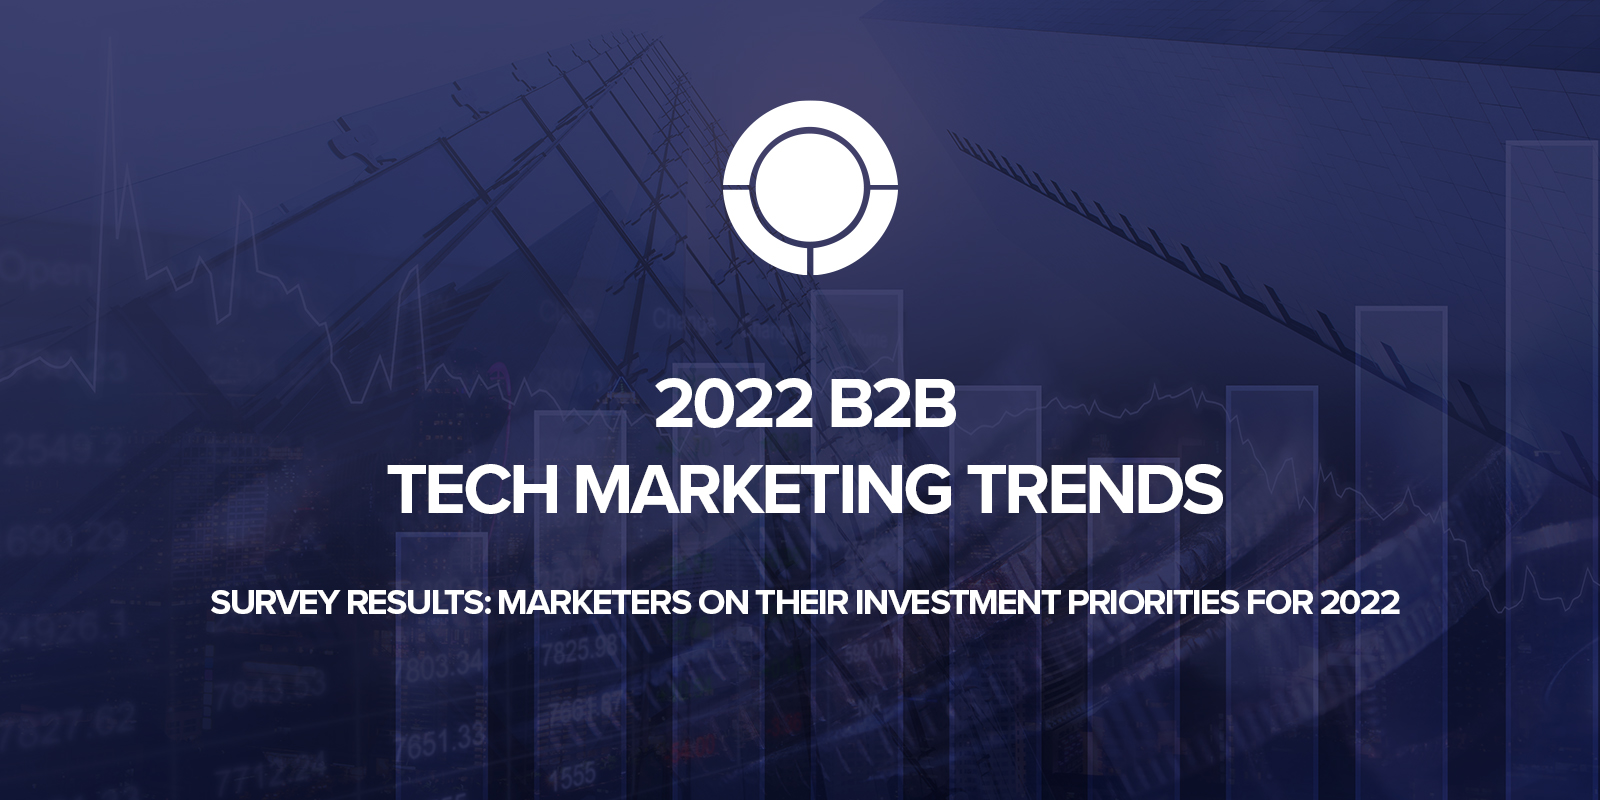 2022 Marketing Trends for B2B Tech Industries